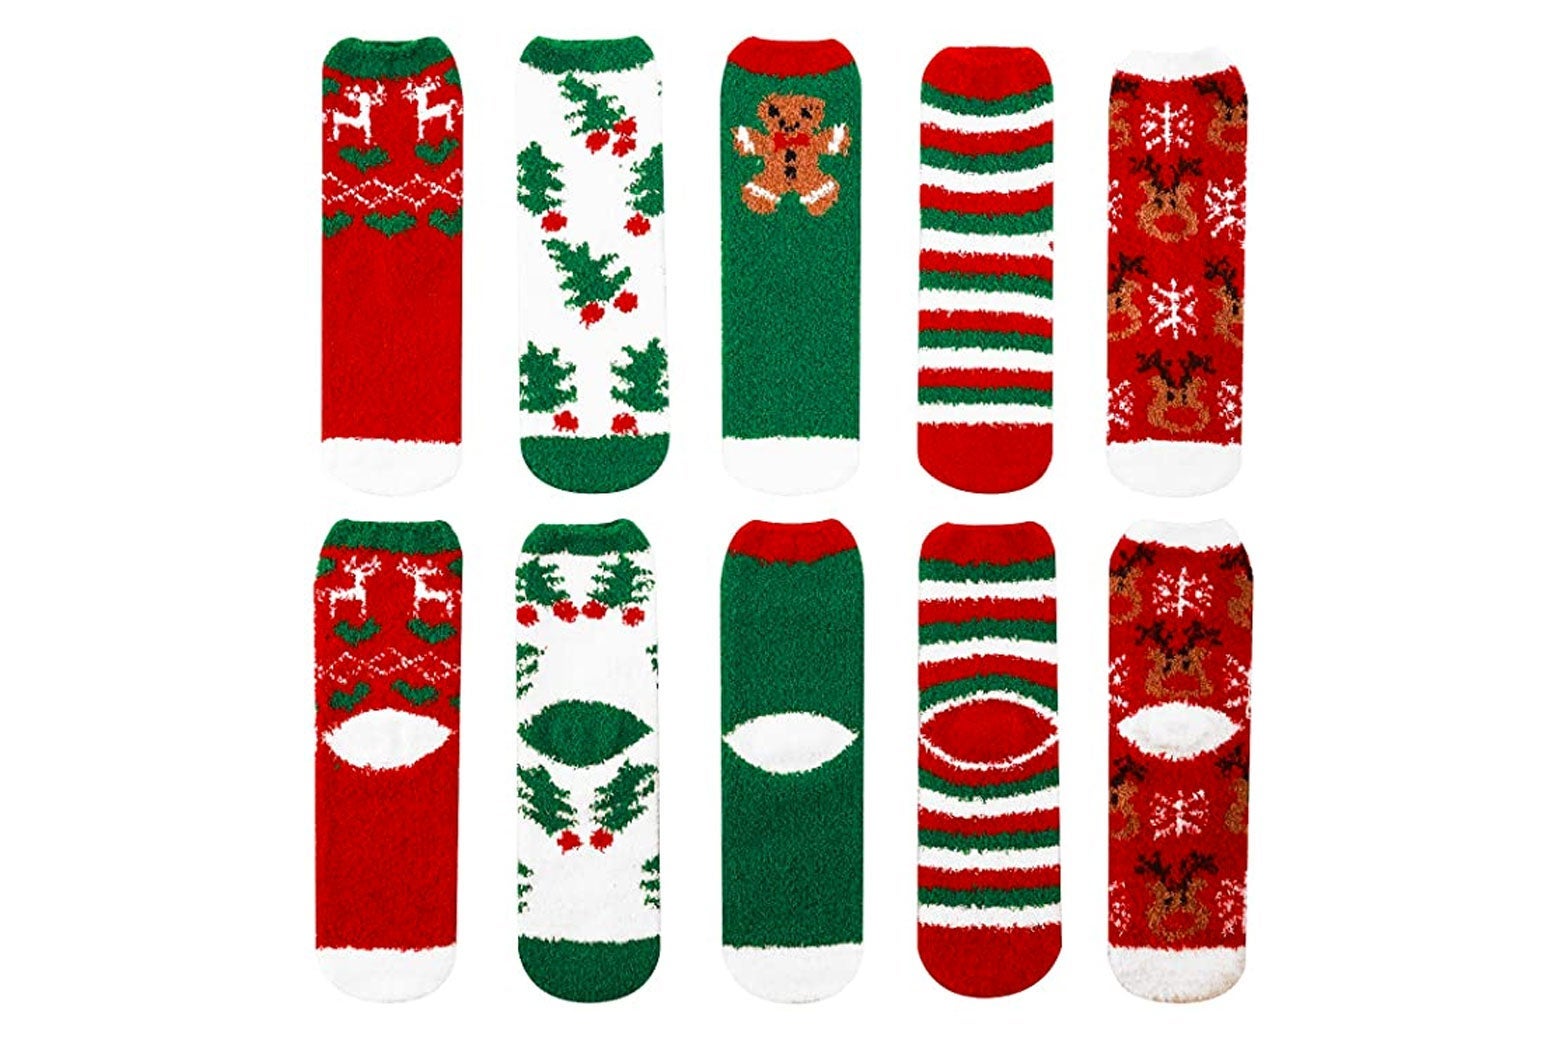 Festive holiday socks.